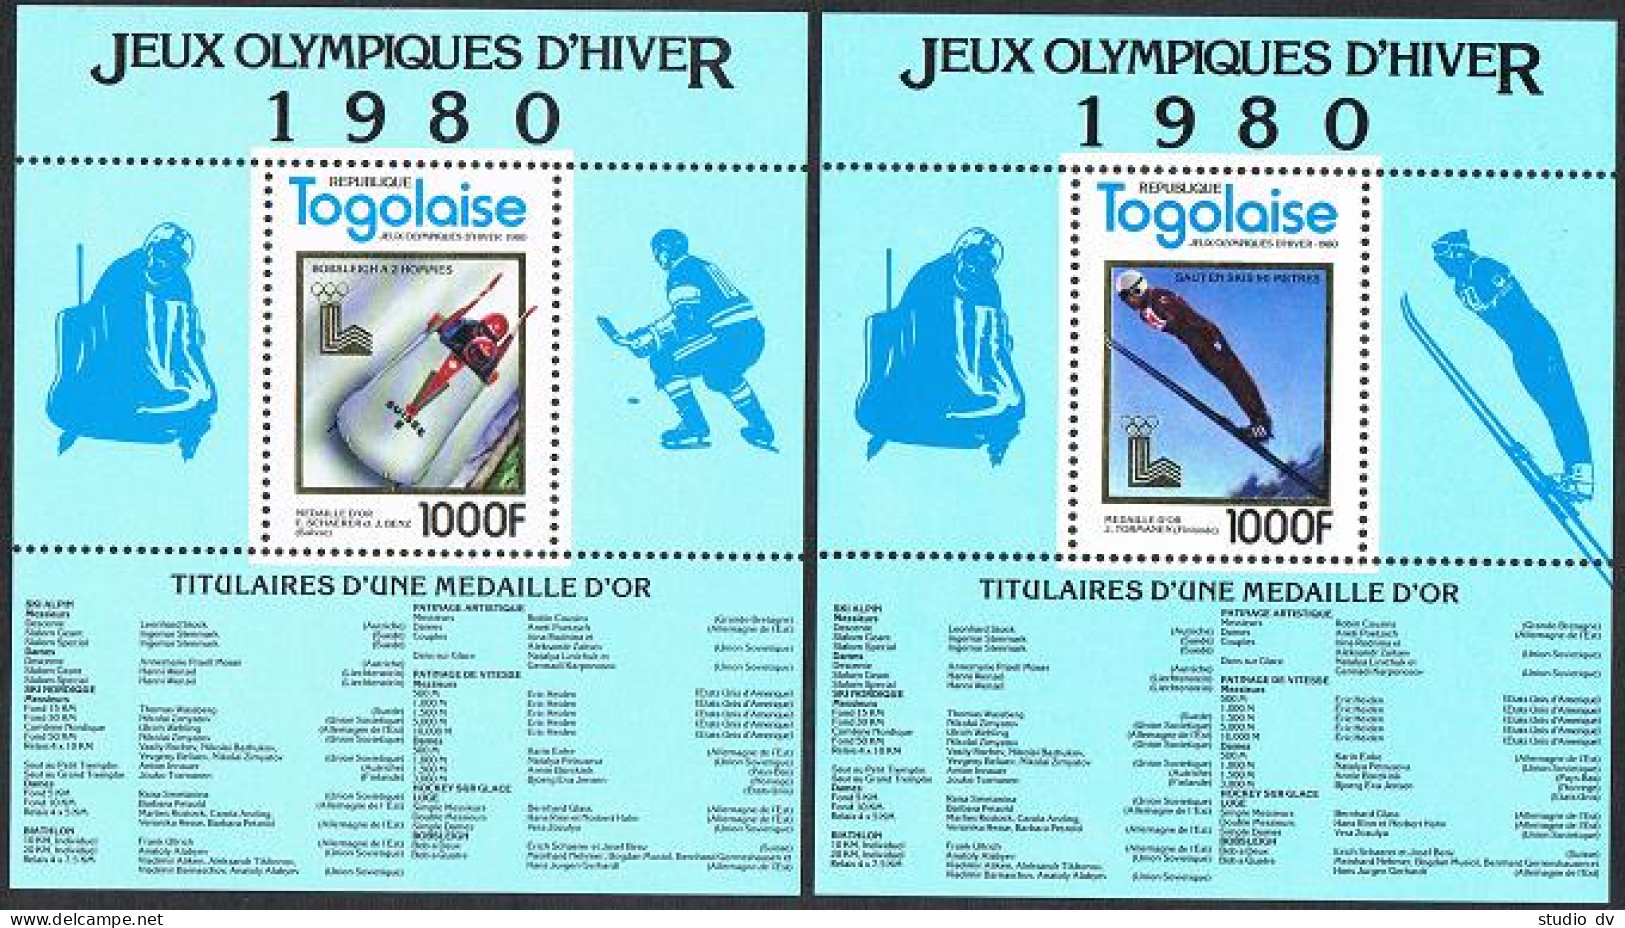 Togo 1049 A-E,1049 F-J,MNH. Olympics Lake Placid-1980. Gold Medalists. Hockey. - Togo (1960-...)